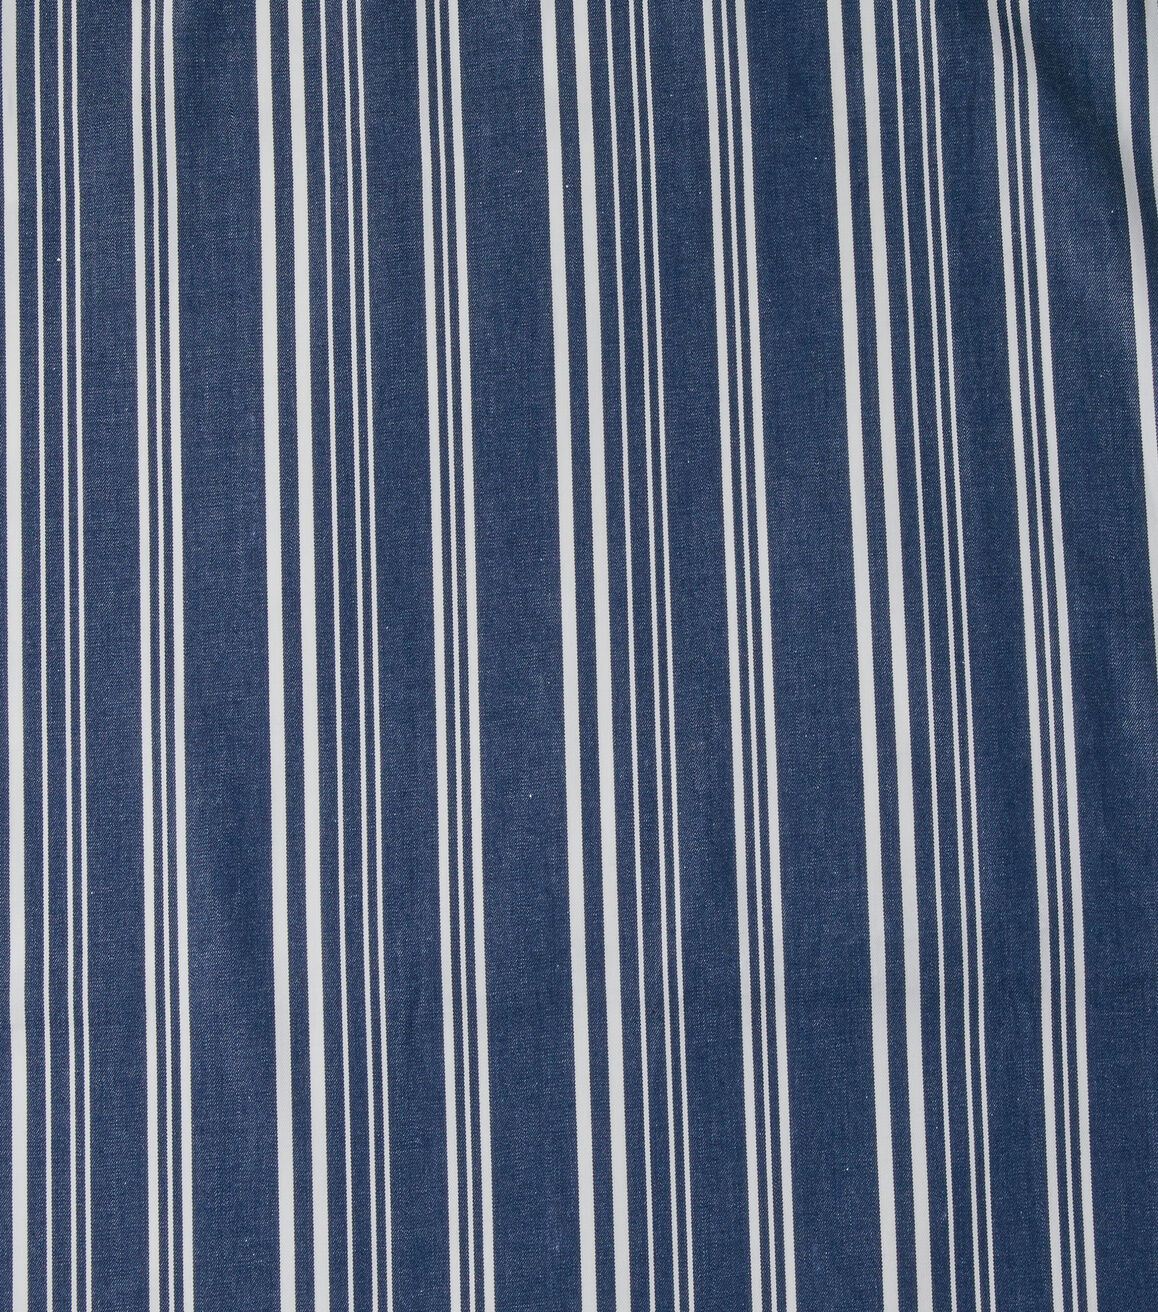 Foiled Denim Fabric | JOANN | Denim fabric, Apparel fabric, Fabric